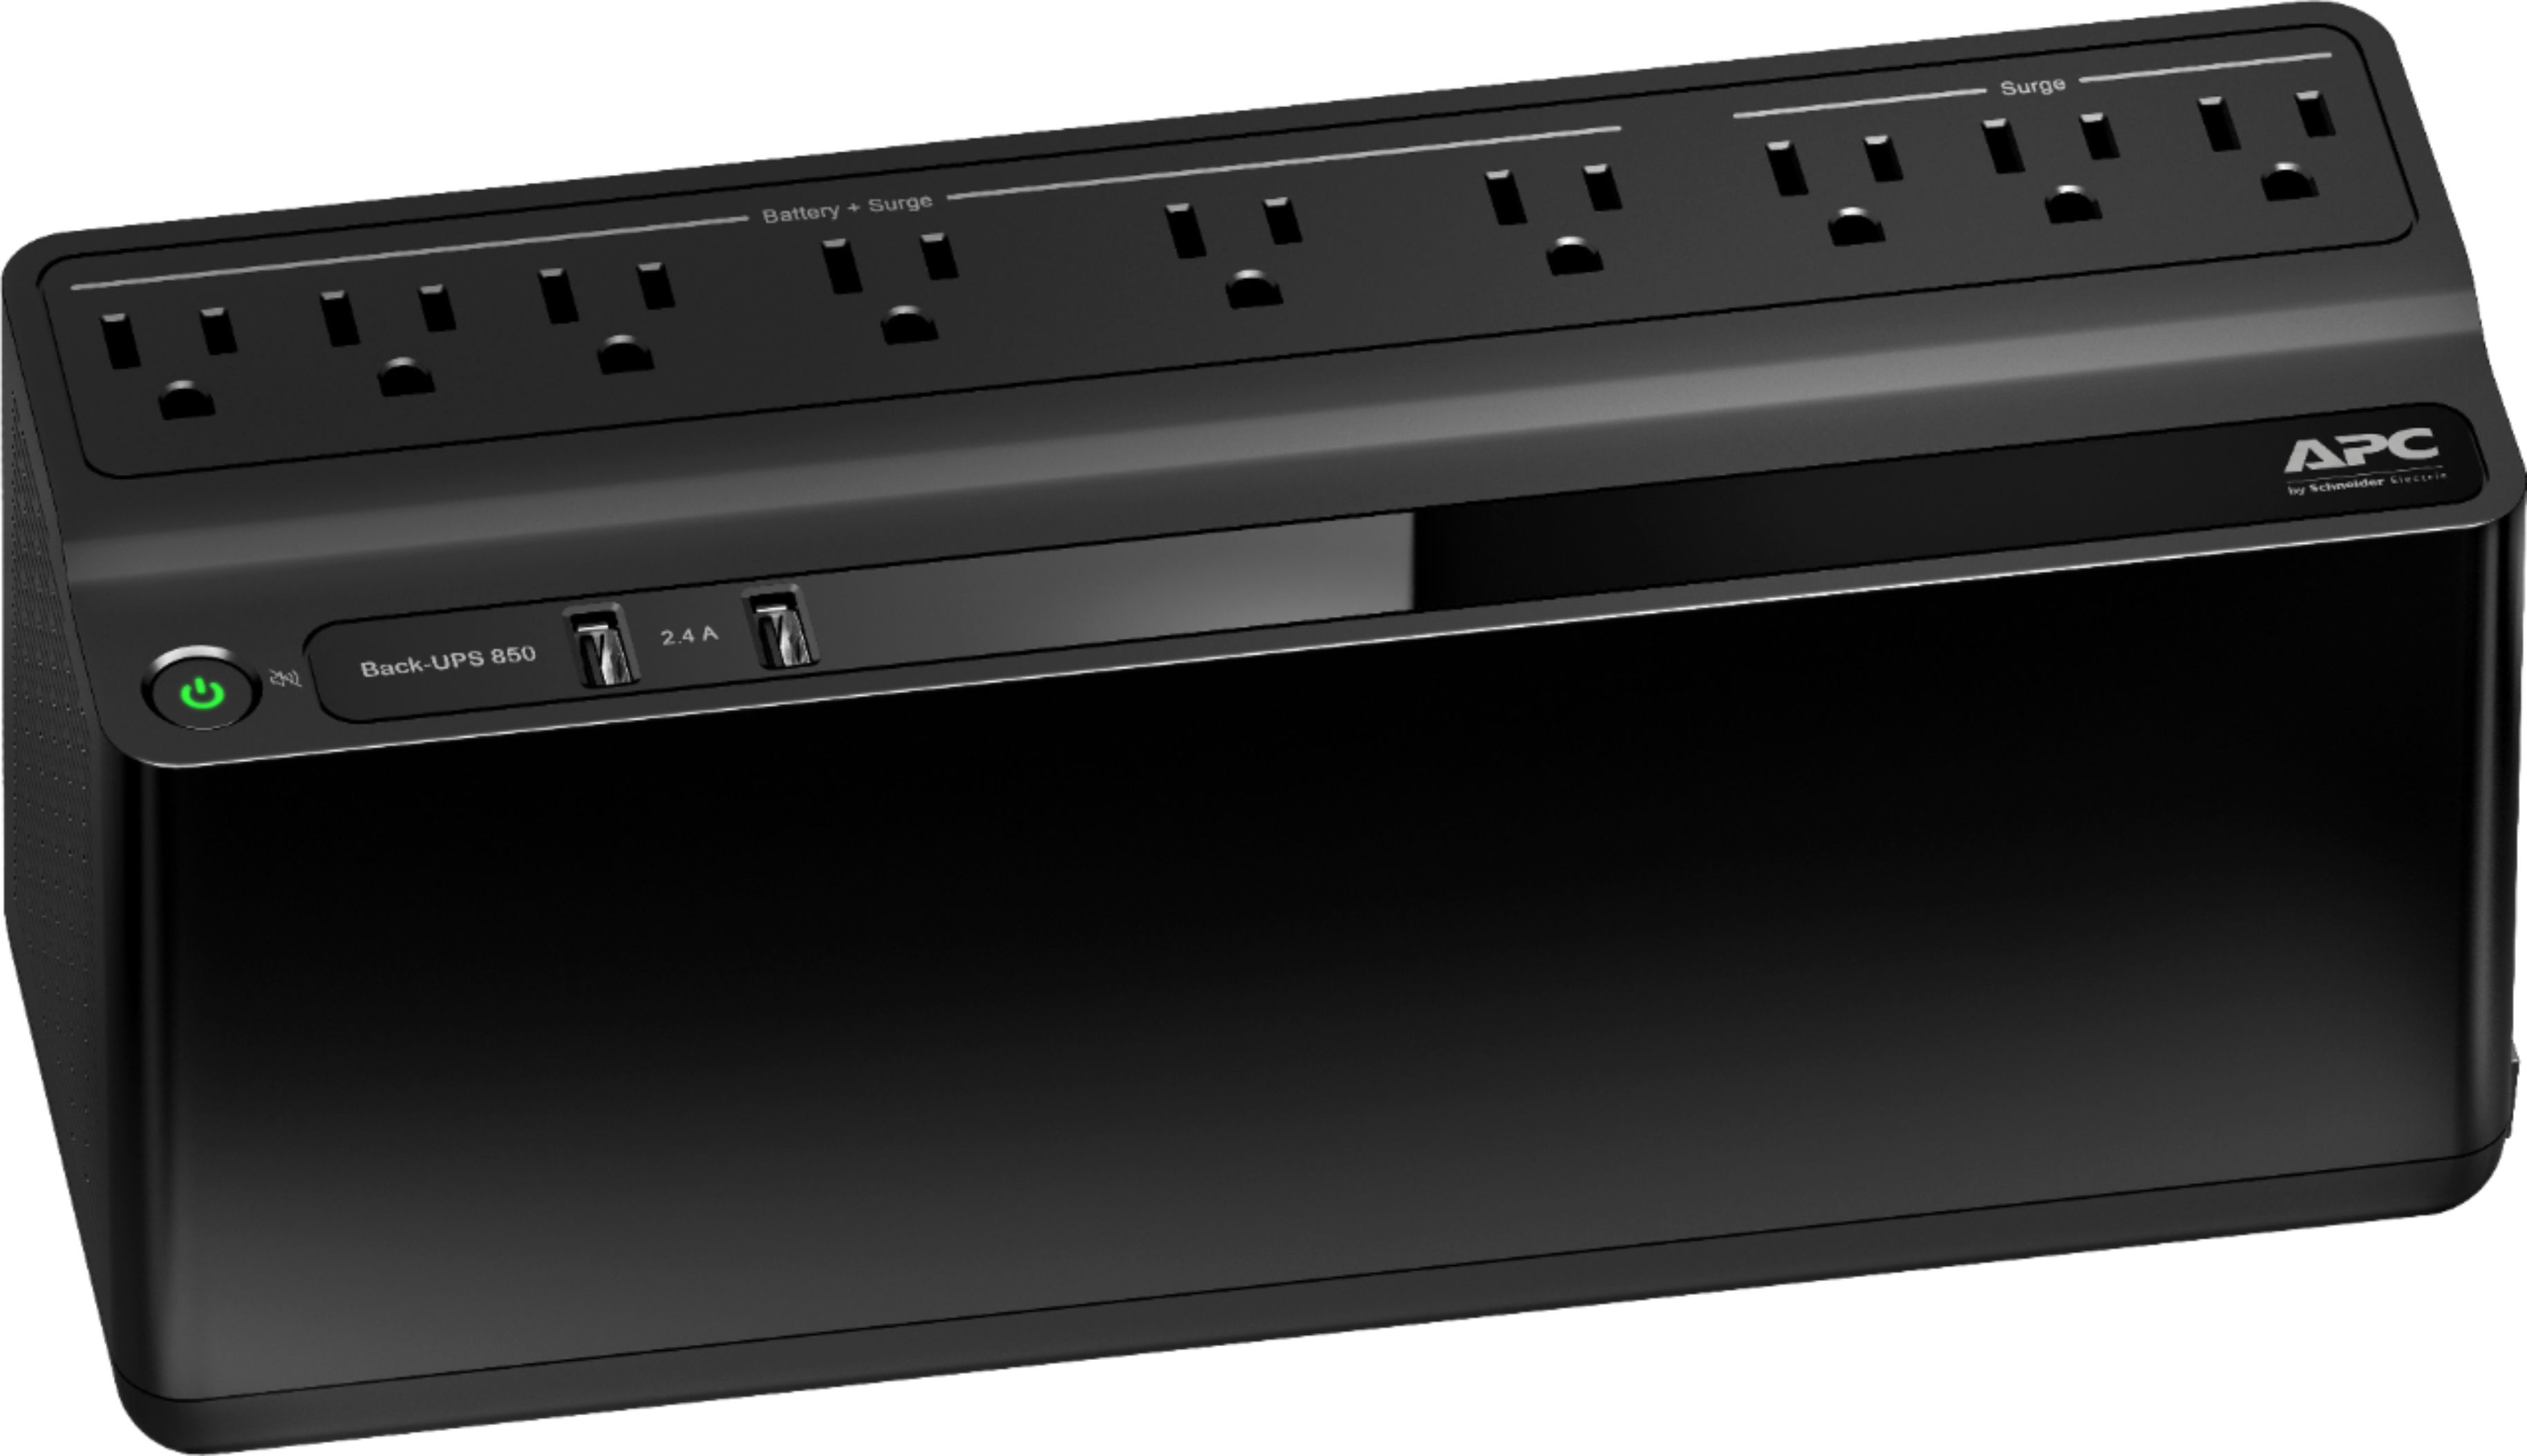 APC - Back-UPS 850VA 9-Outlet/2-USB Battery Back-Up and Surge Protector - Black